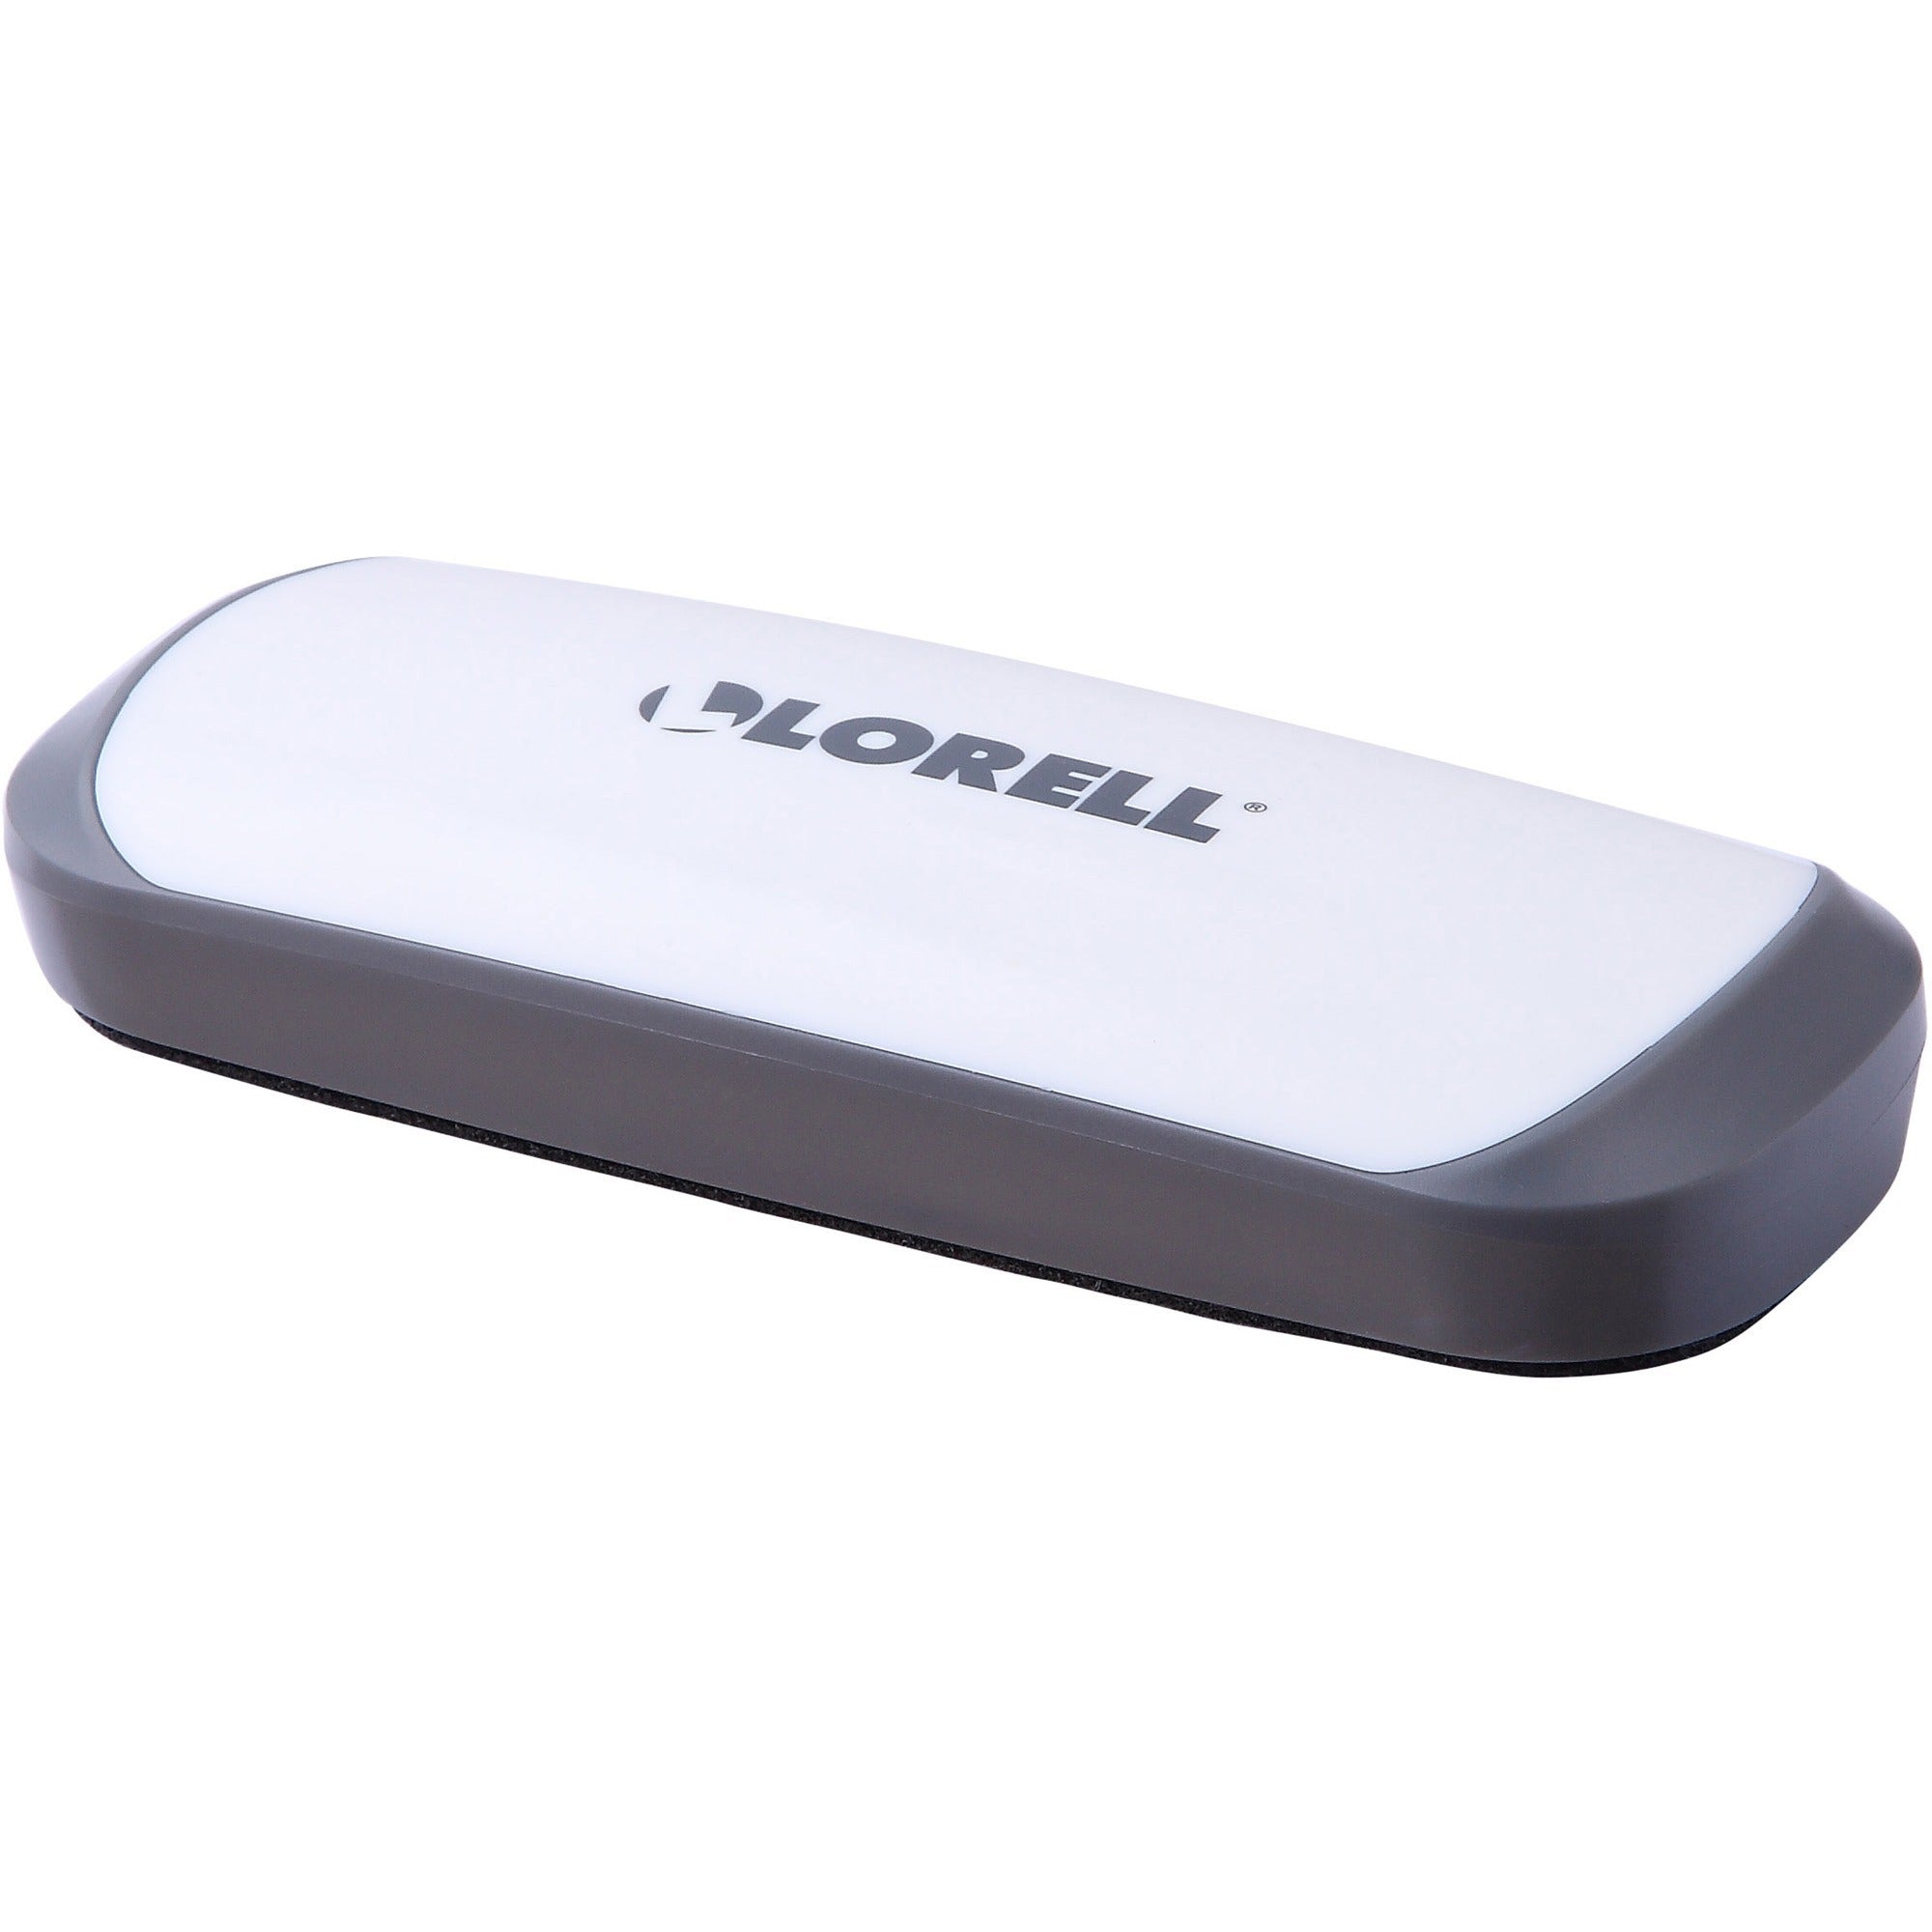 Lorell Rare Earth Magnet Board Eraser - Magnetic - Black, White - Plastic - 1Each - 